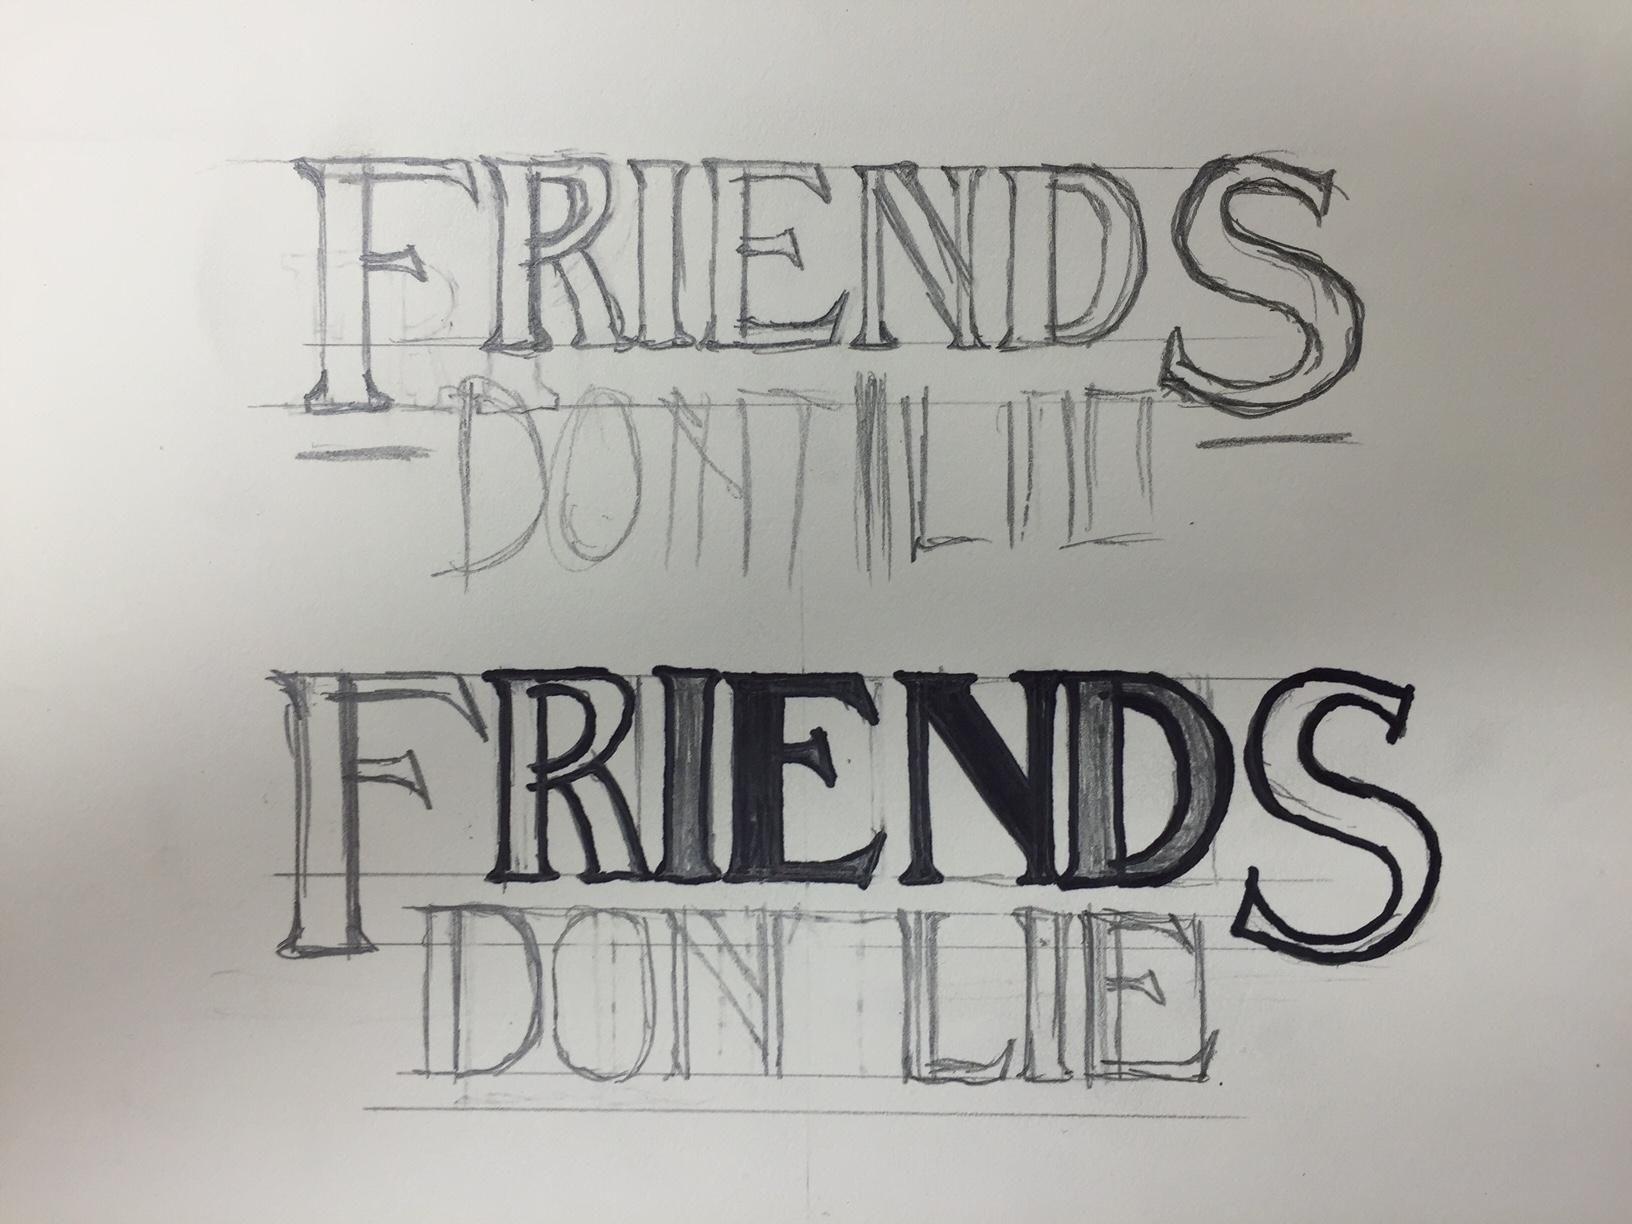 Friends Dont Lie Wallpapers  Top Free Friends Dont Lie Backgrounds   WallpaperAccess